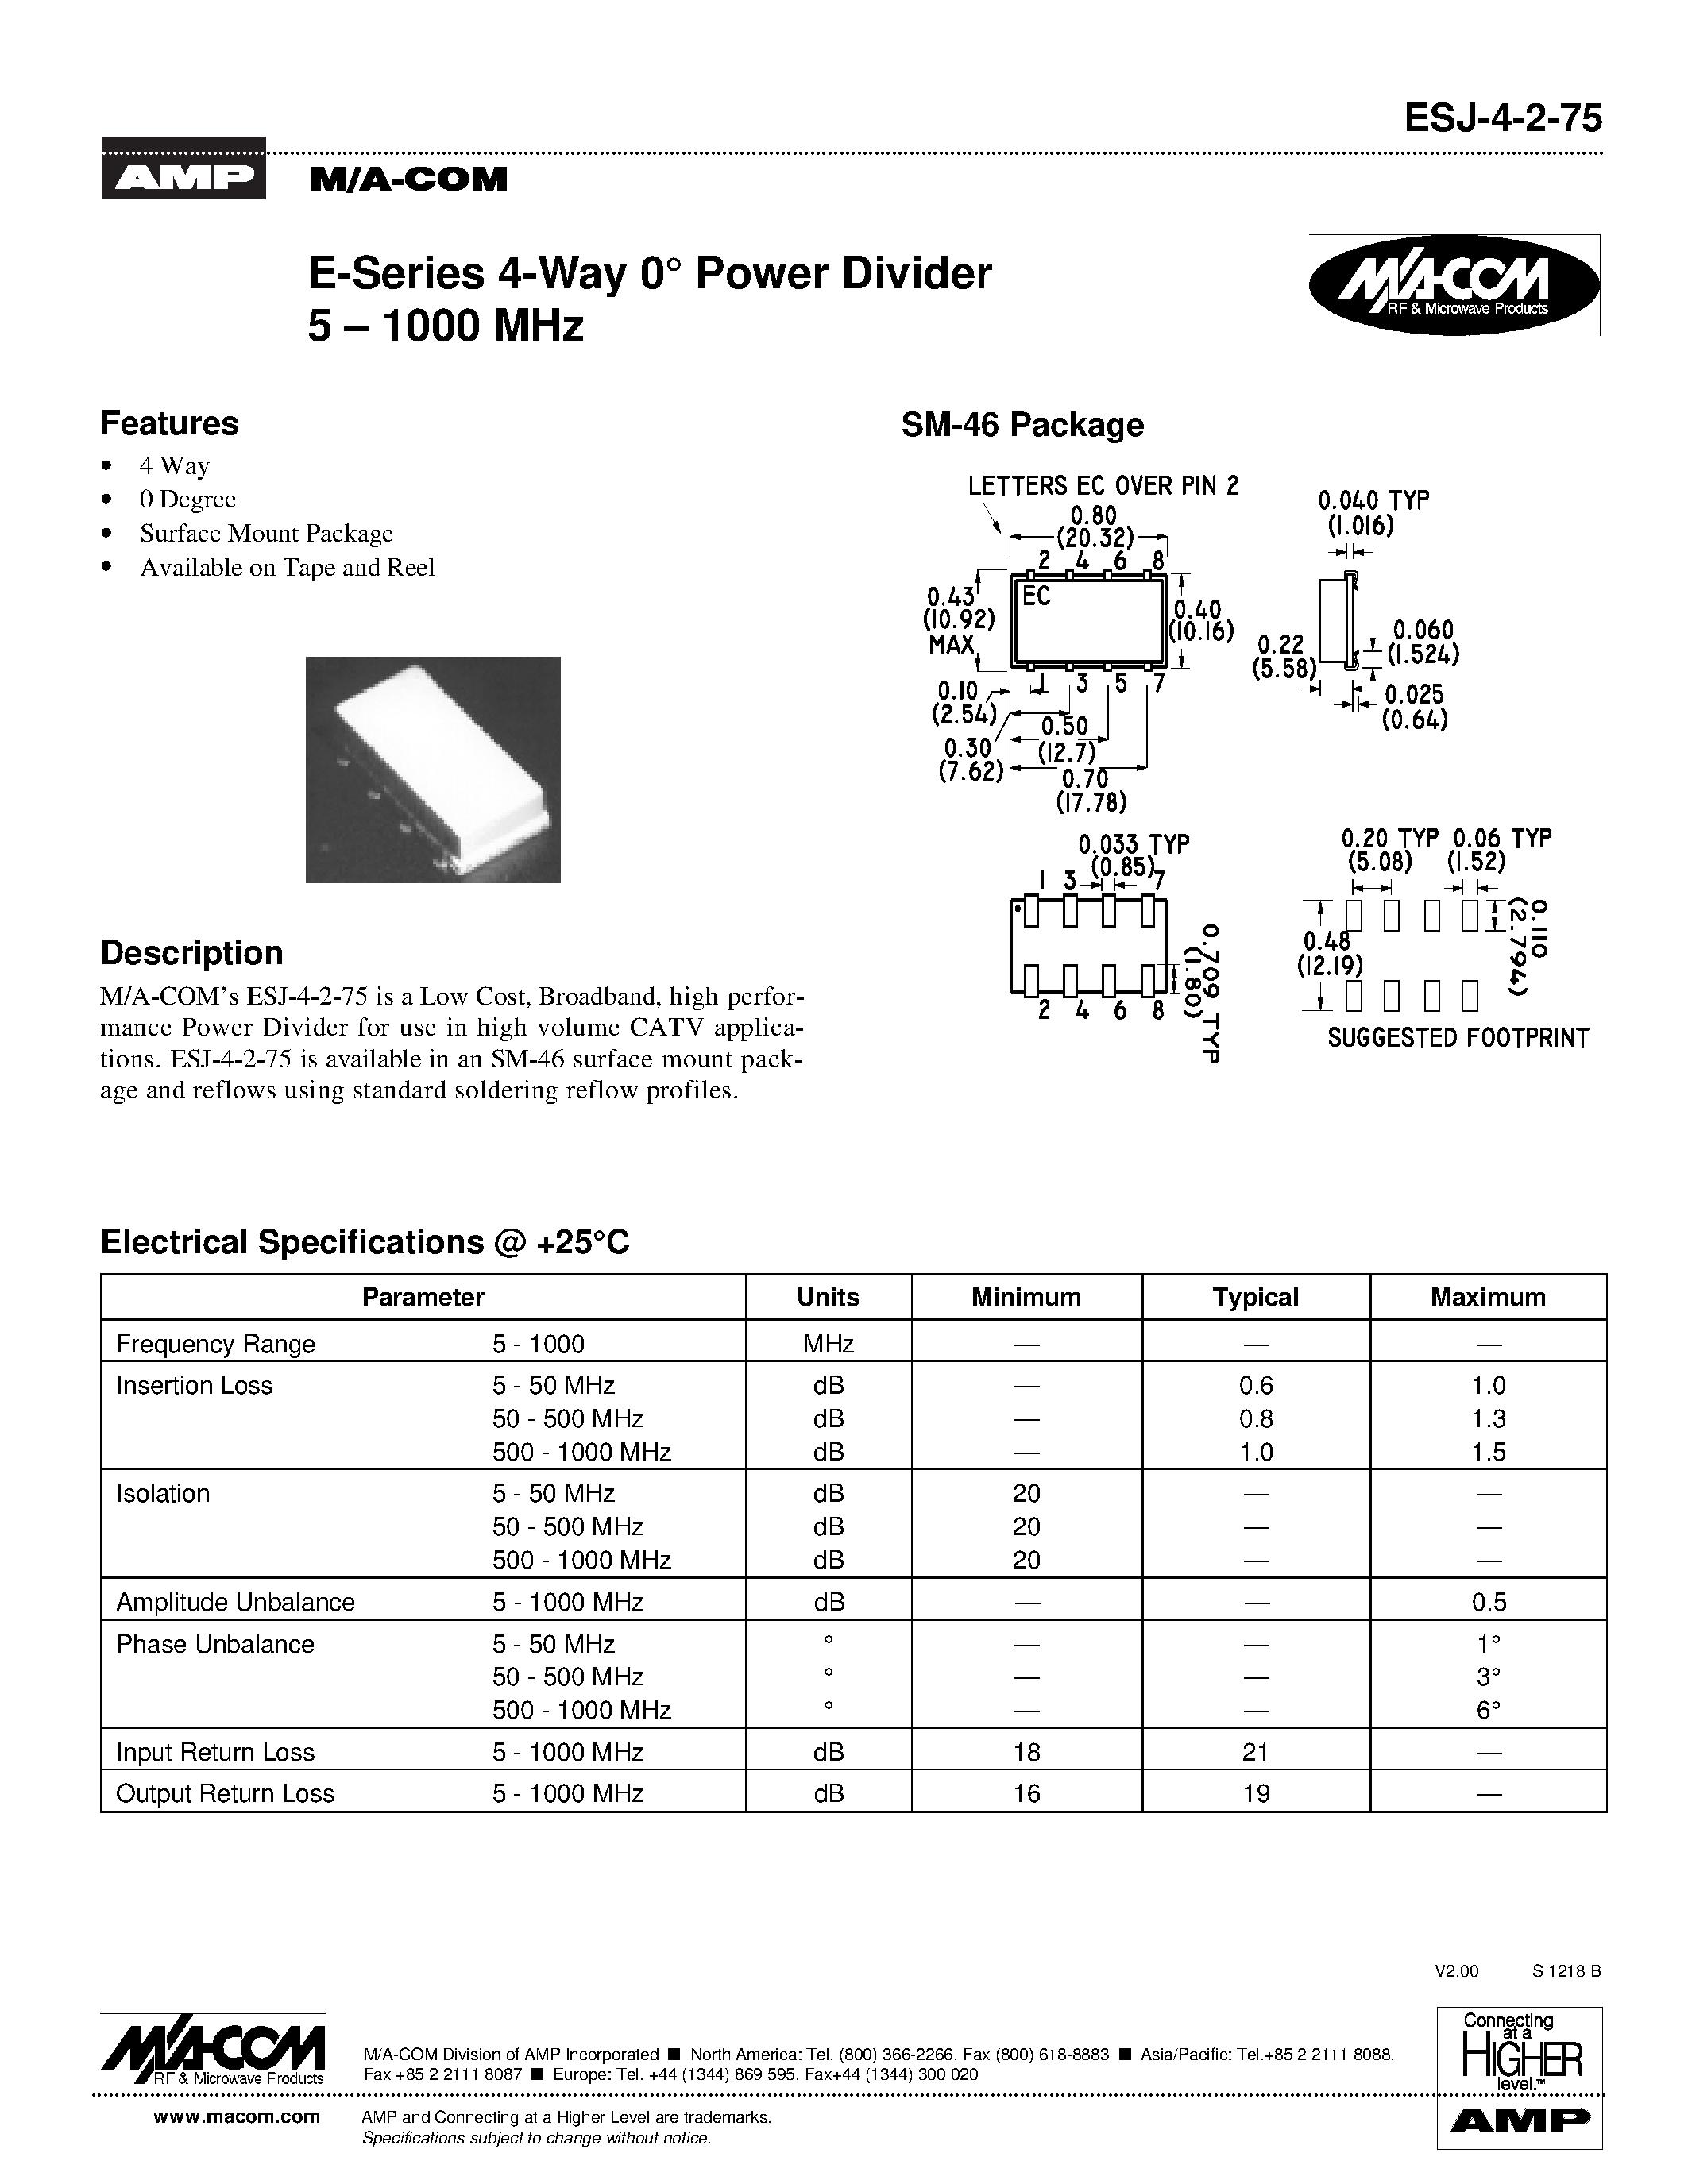 Даташит ESJ-4-2-75 - E-Series 4-Way 0 Power Divider 5 - 1000 MHz страница 1